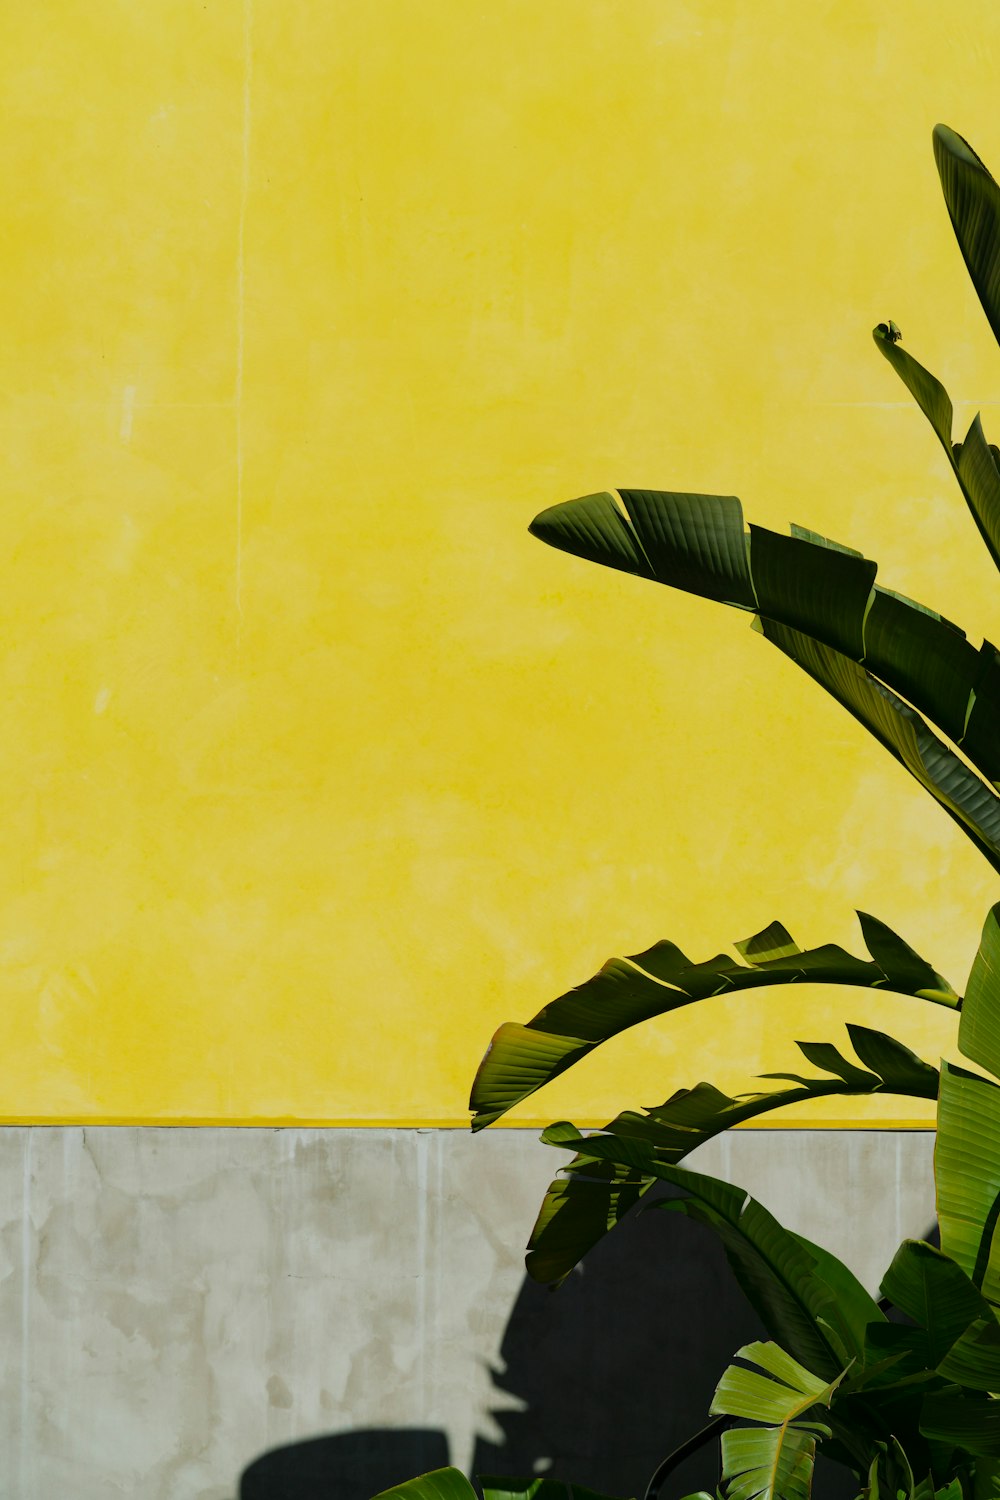 green banana tree beside yellow painted wall photo – Free Yellow Image on  Unsplash